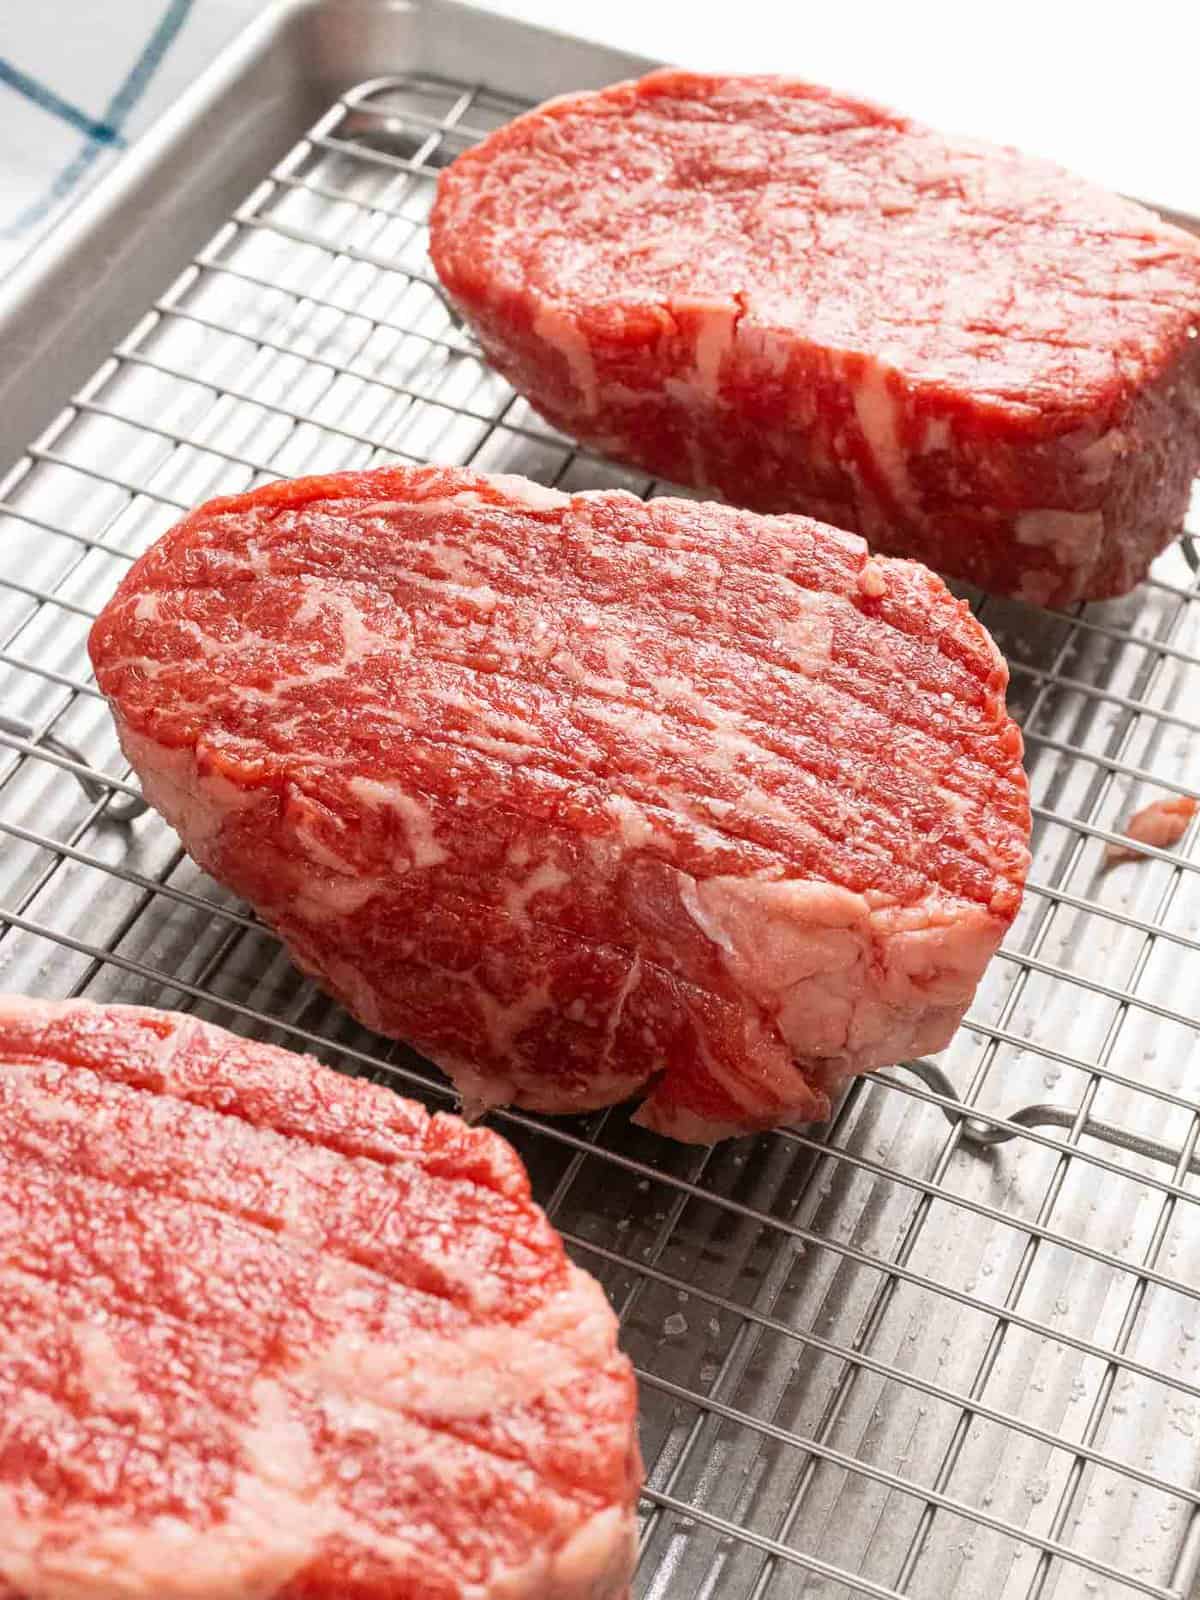 Thick-cut ribeye steaks on a baking rack.